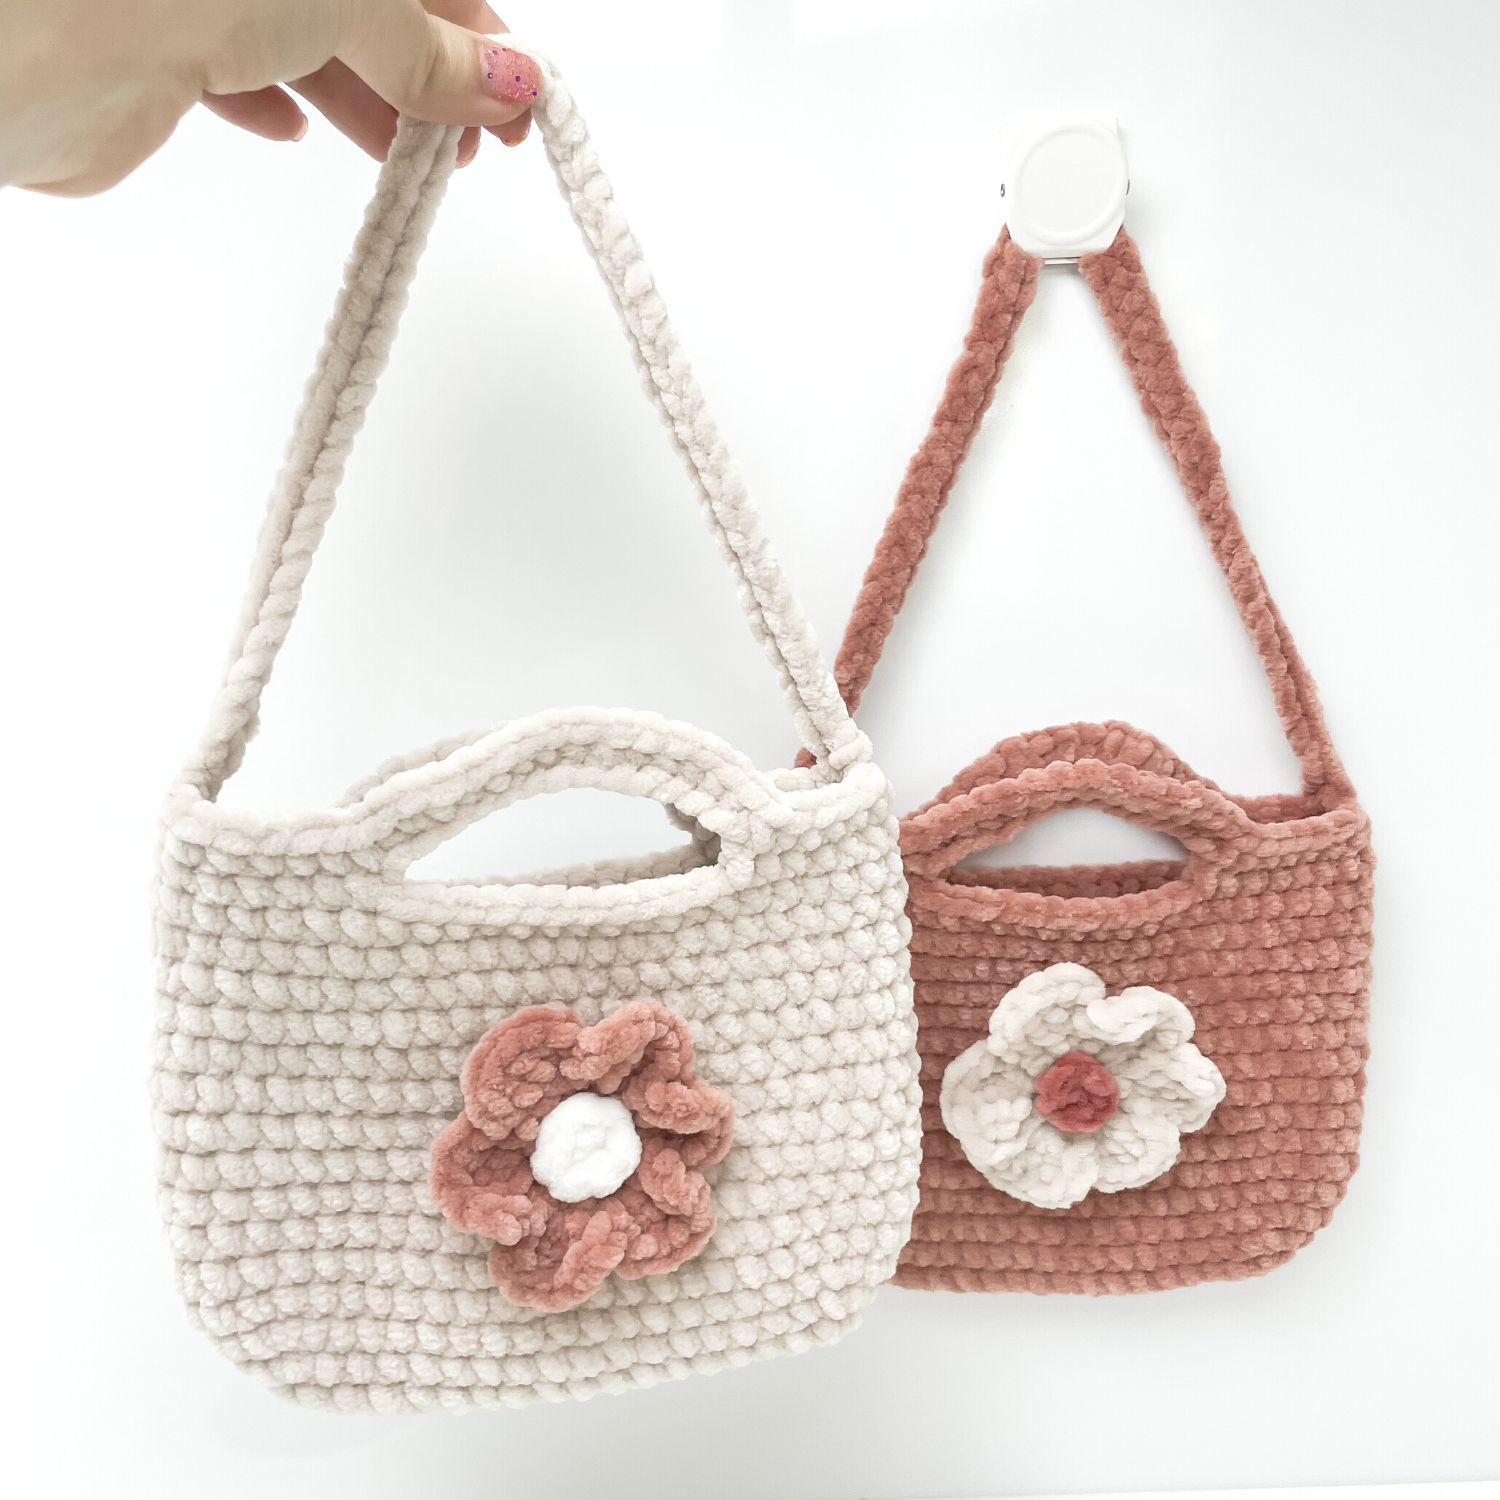 Crochet - Crosia Free Pattern with Video Tutorials: Crochet Small Cute Purse